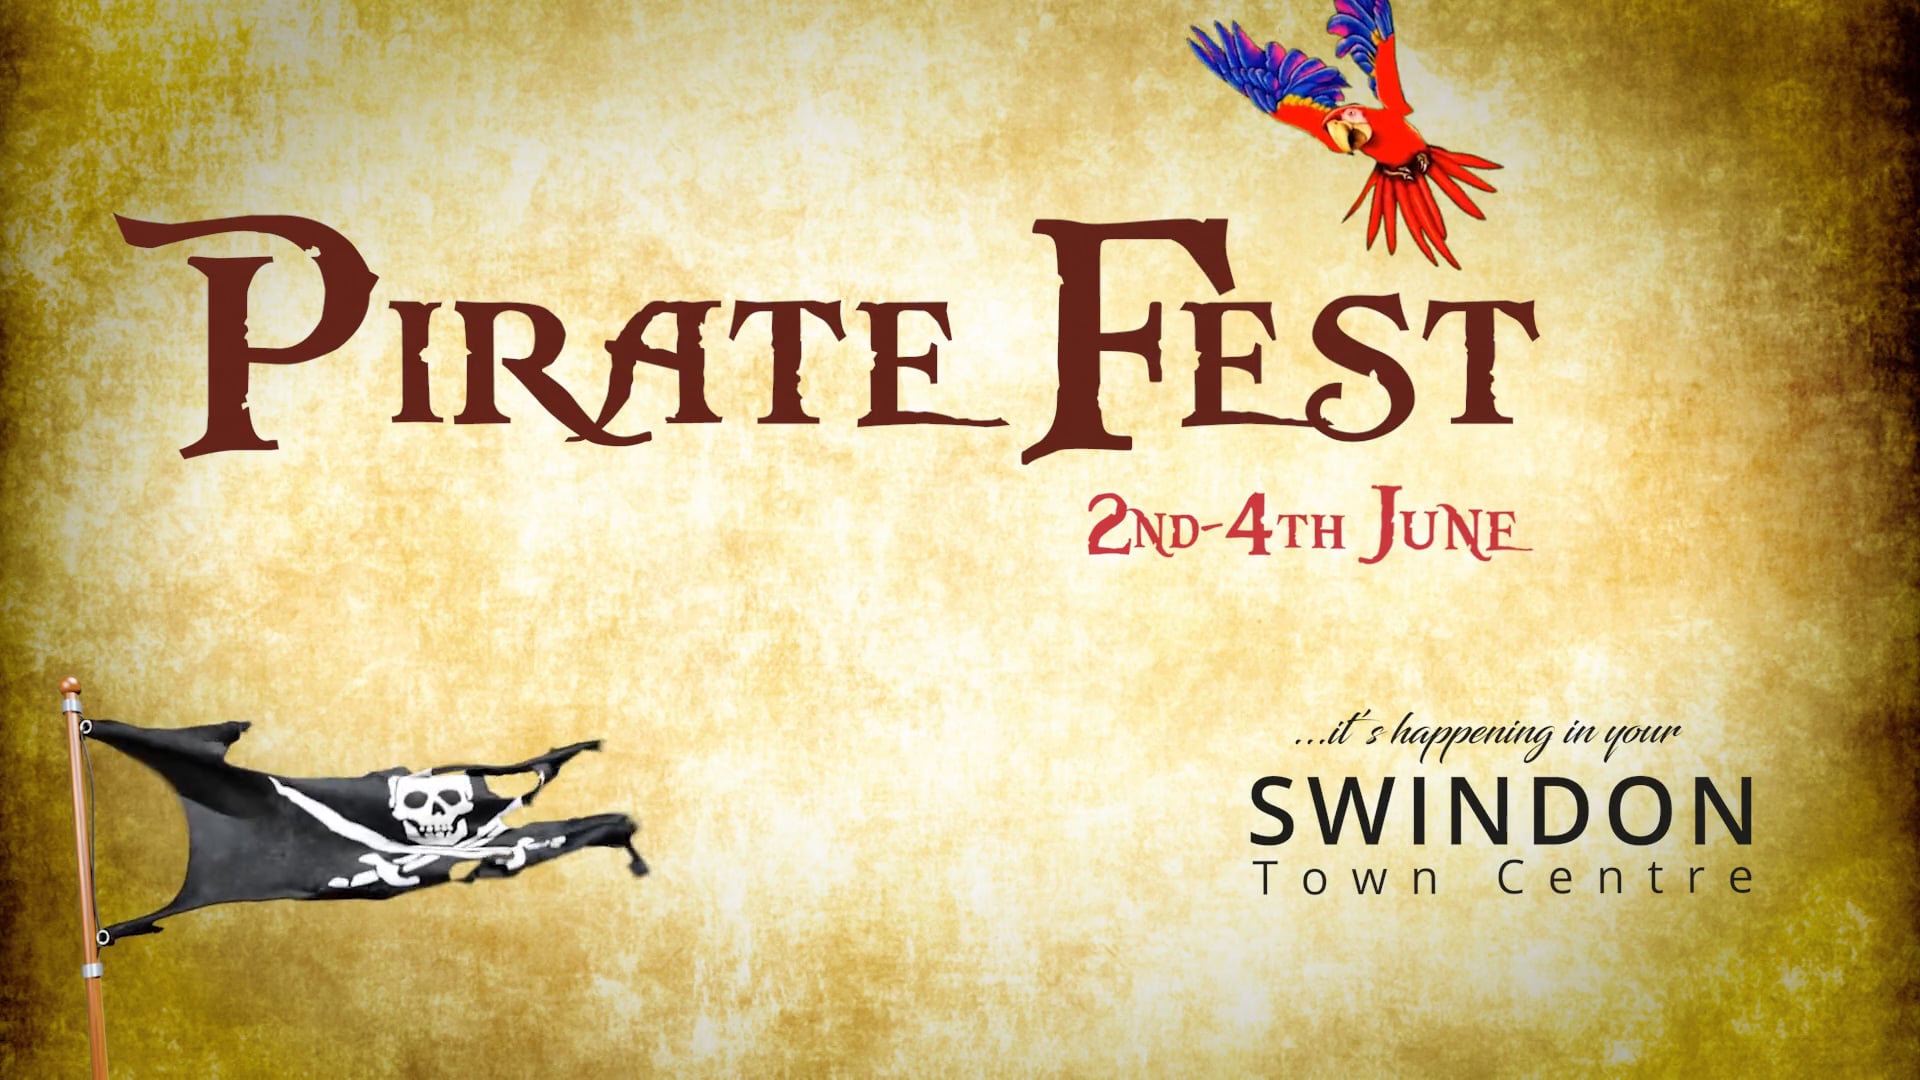 Pirate Fest - Swindon Town Centre